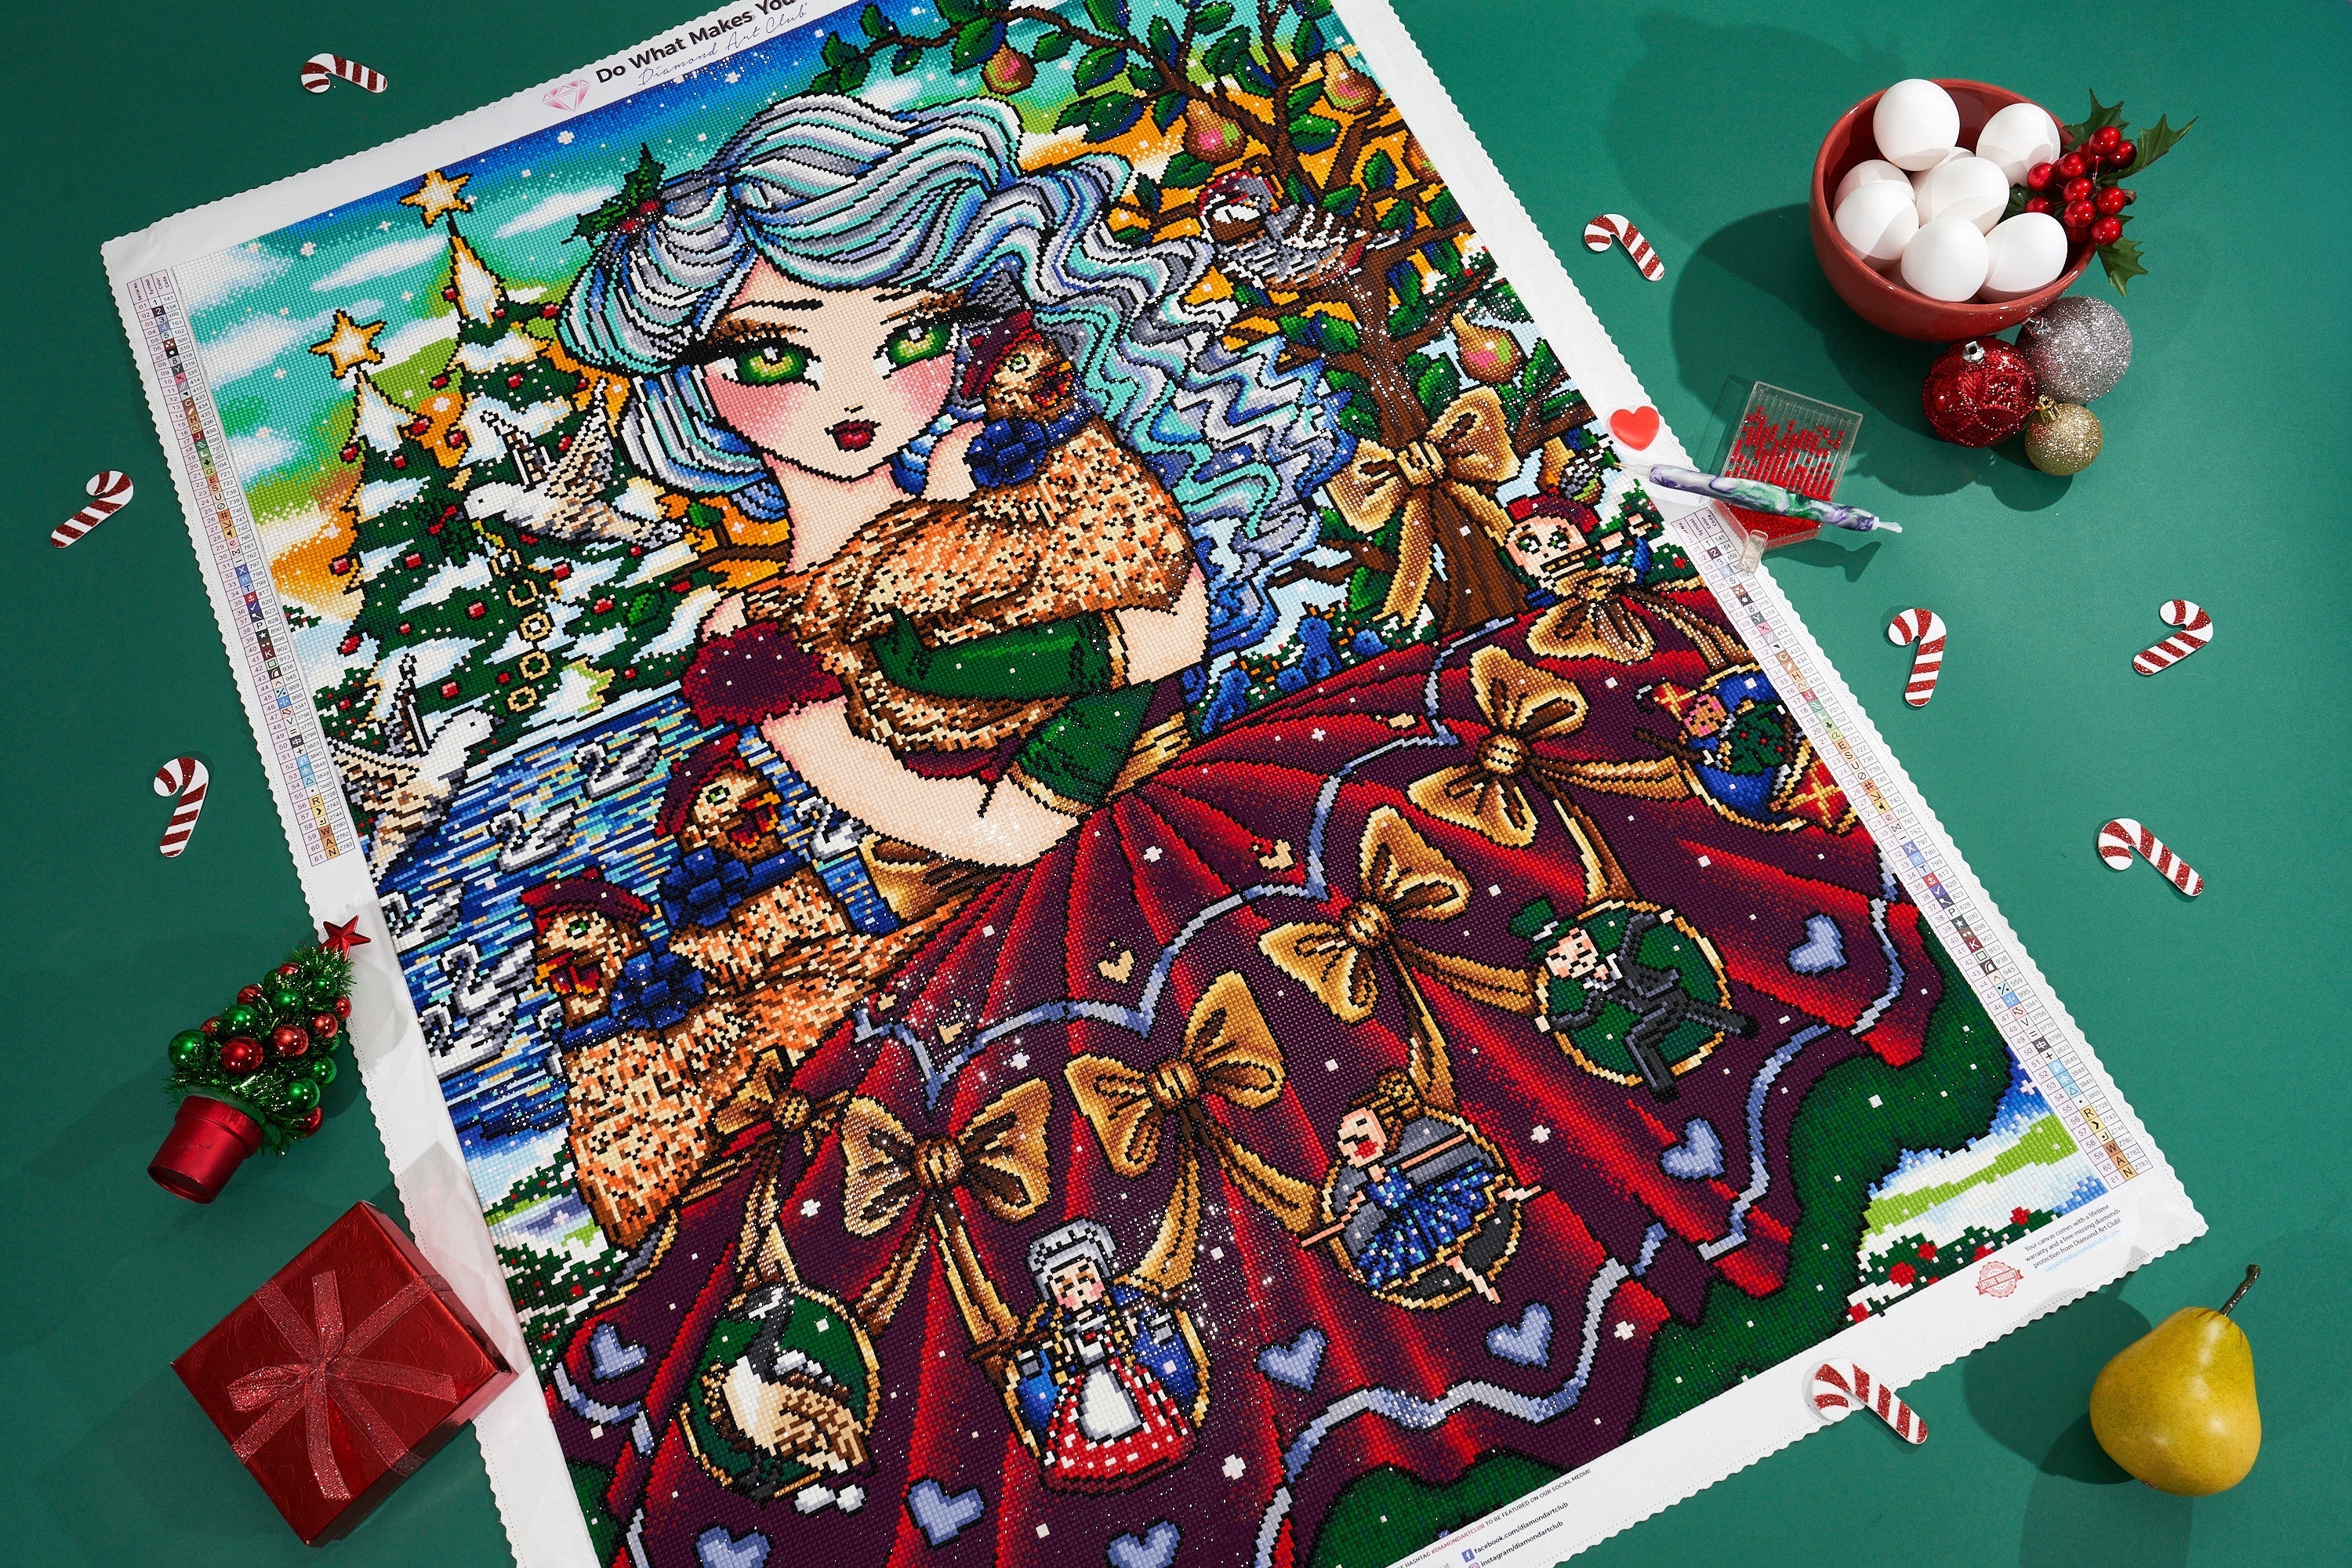 Christmas Magic – Diamond Art Club